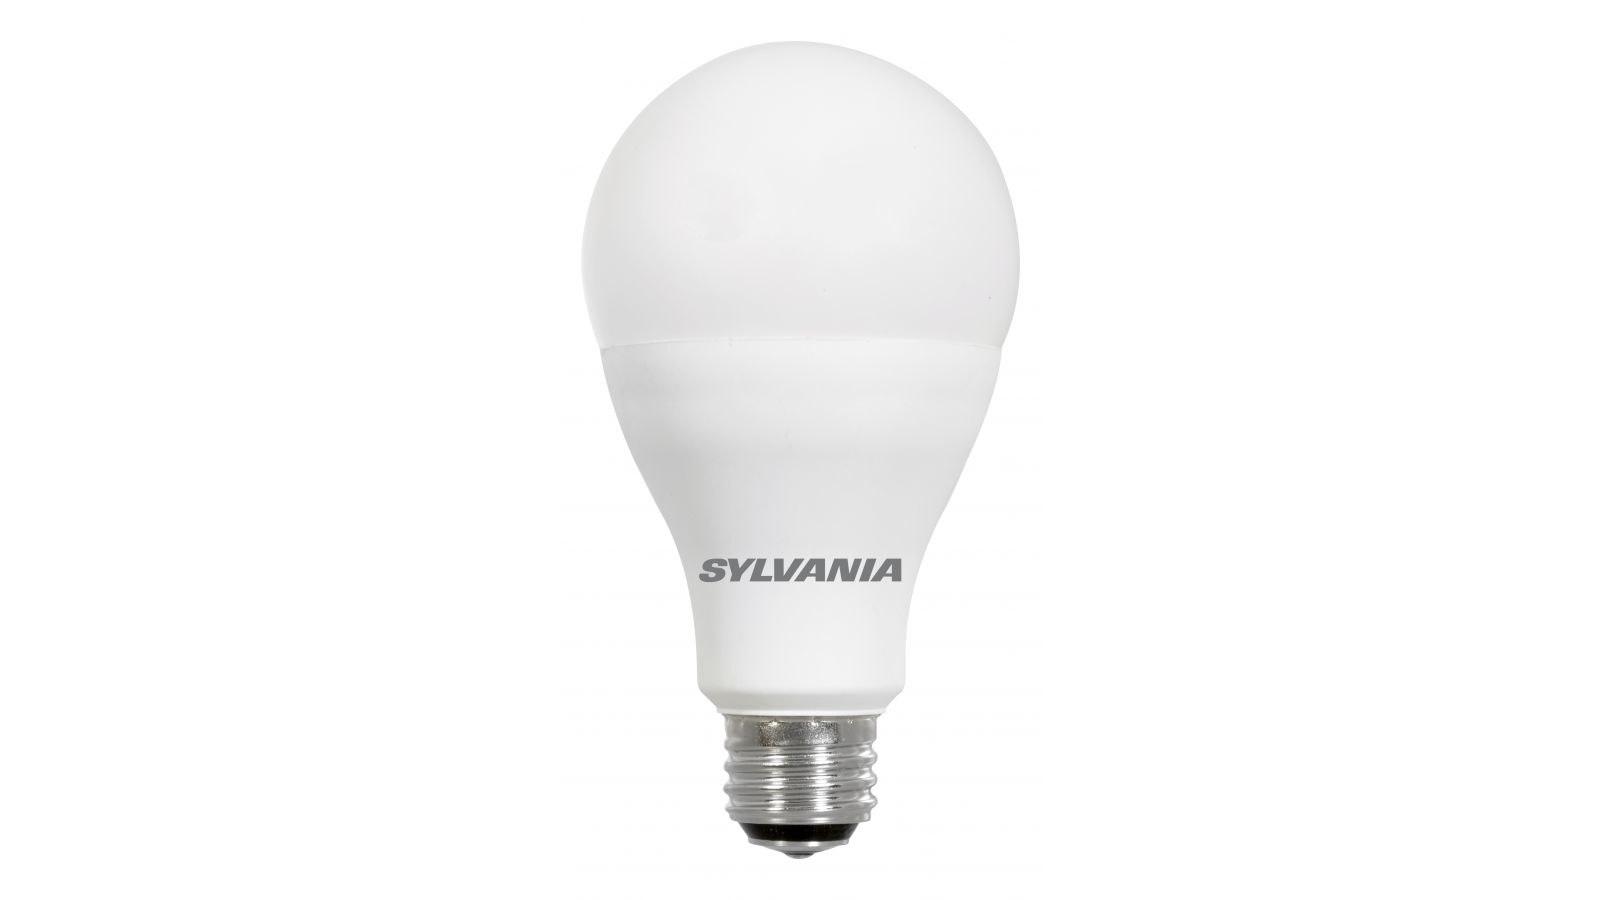 SYLVANIA ULTRA LED A21 Lamp